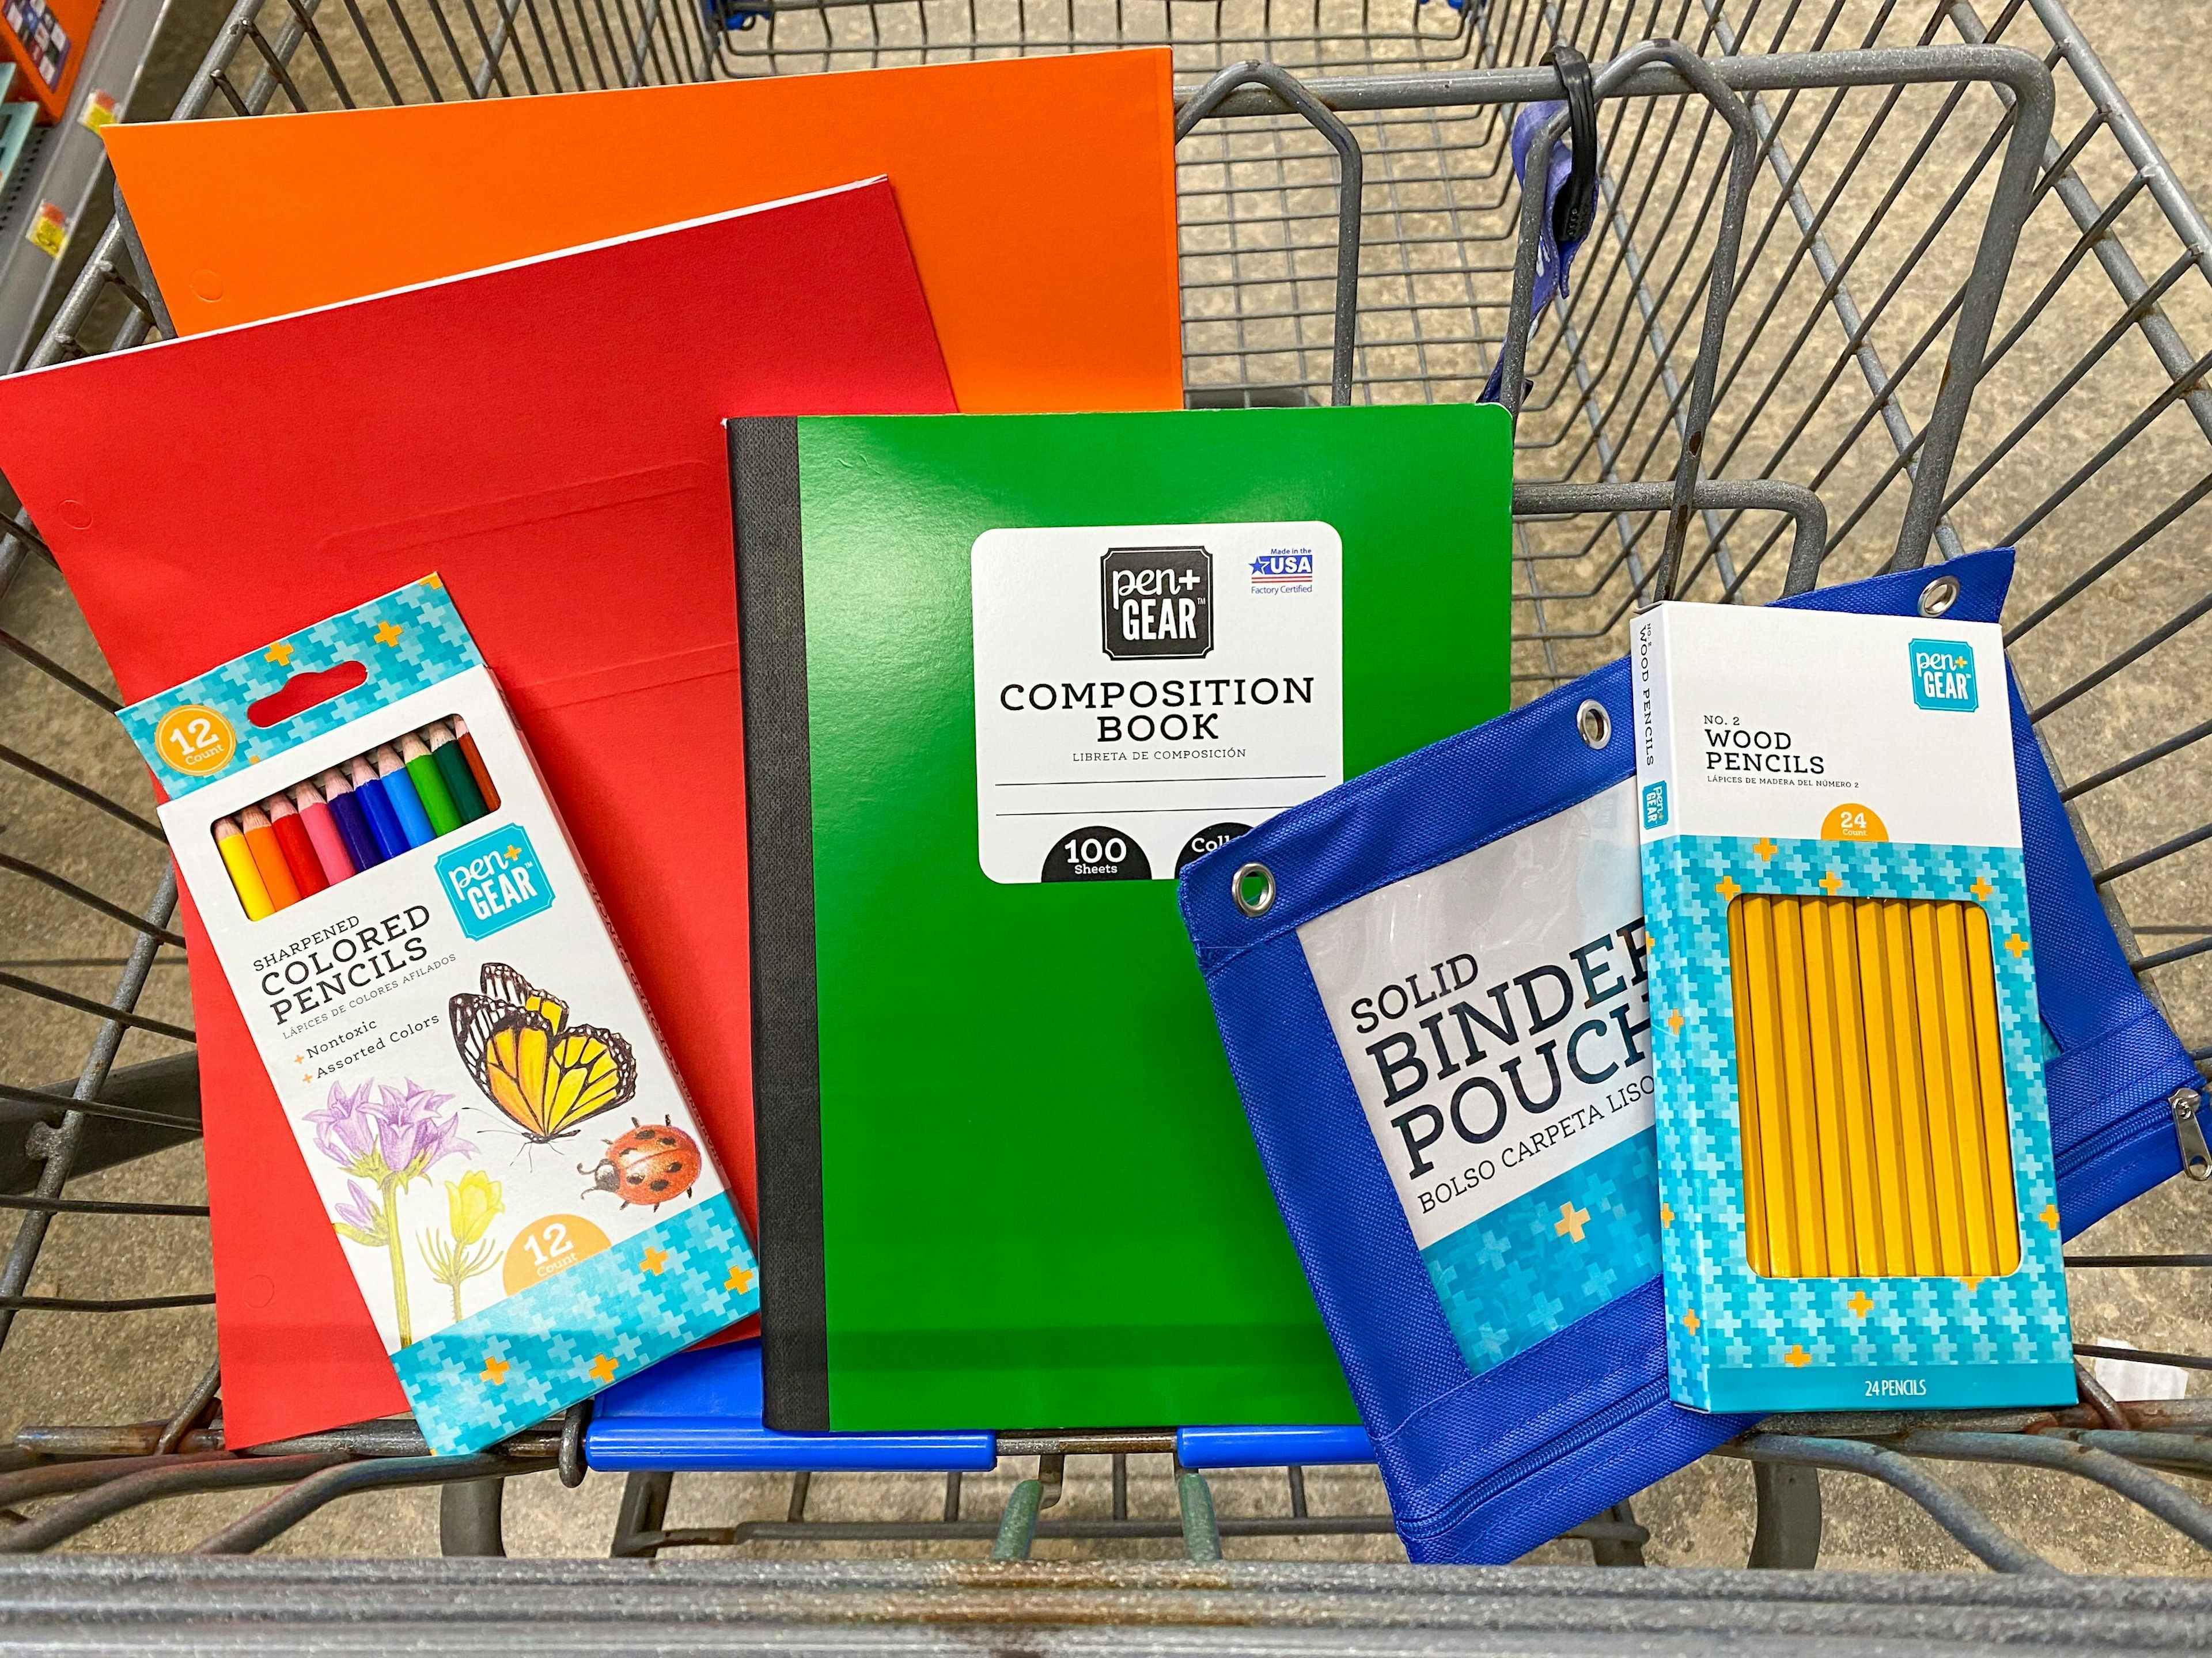 Some Pen + Gear school supplies in a Walmart cart.